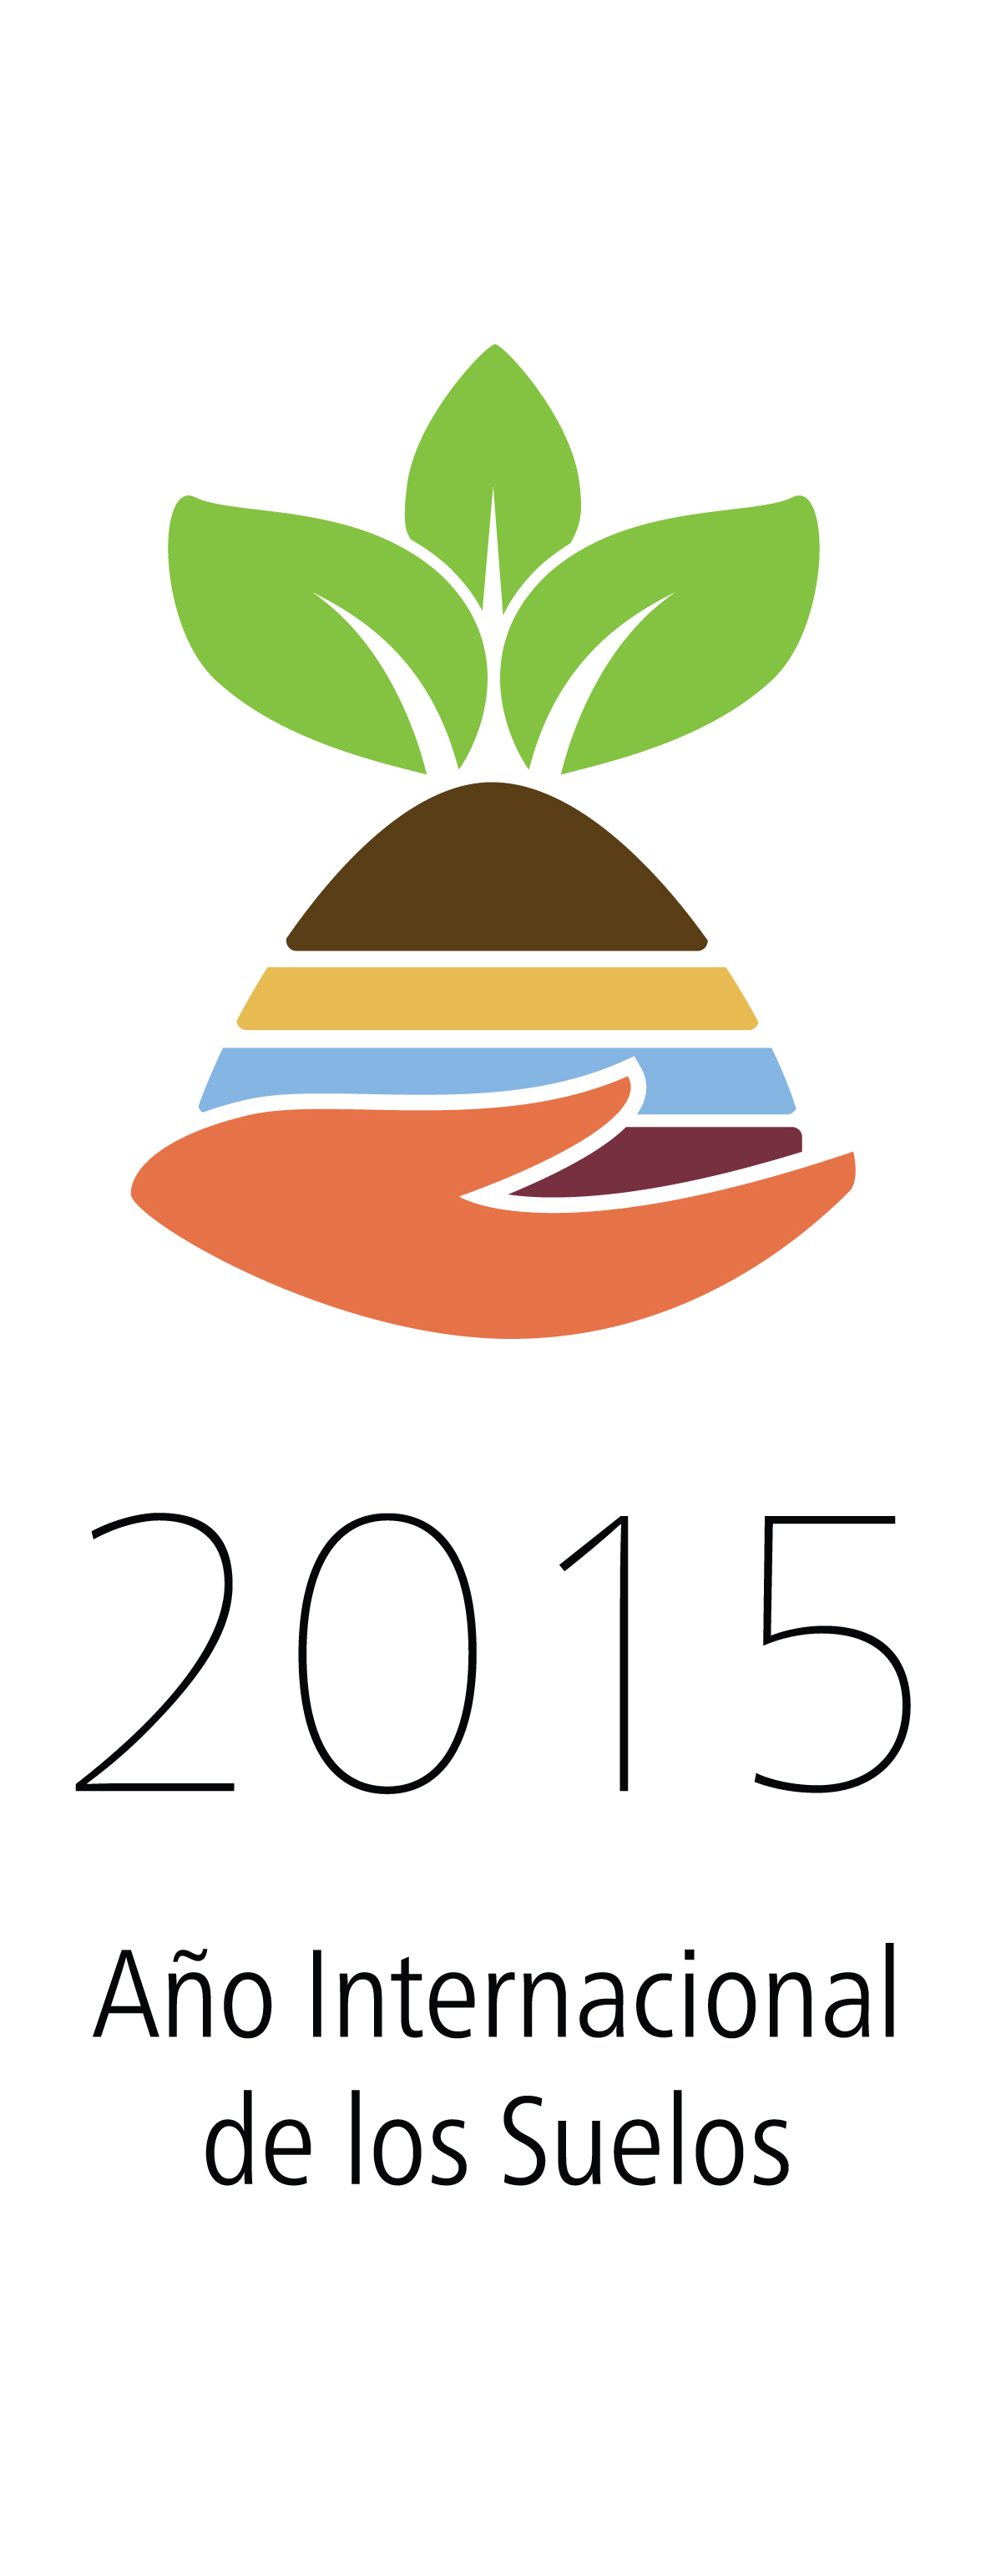 Descargar el logo del AIS 2015 | 2015 International Year of Soils